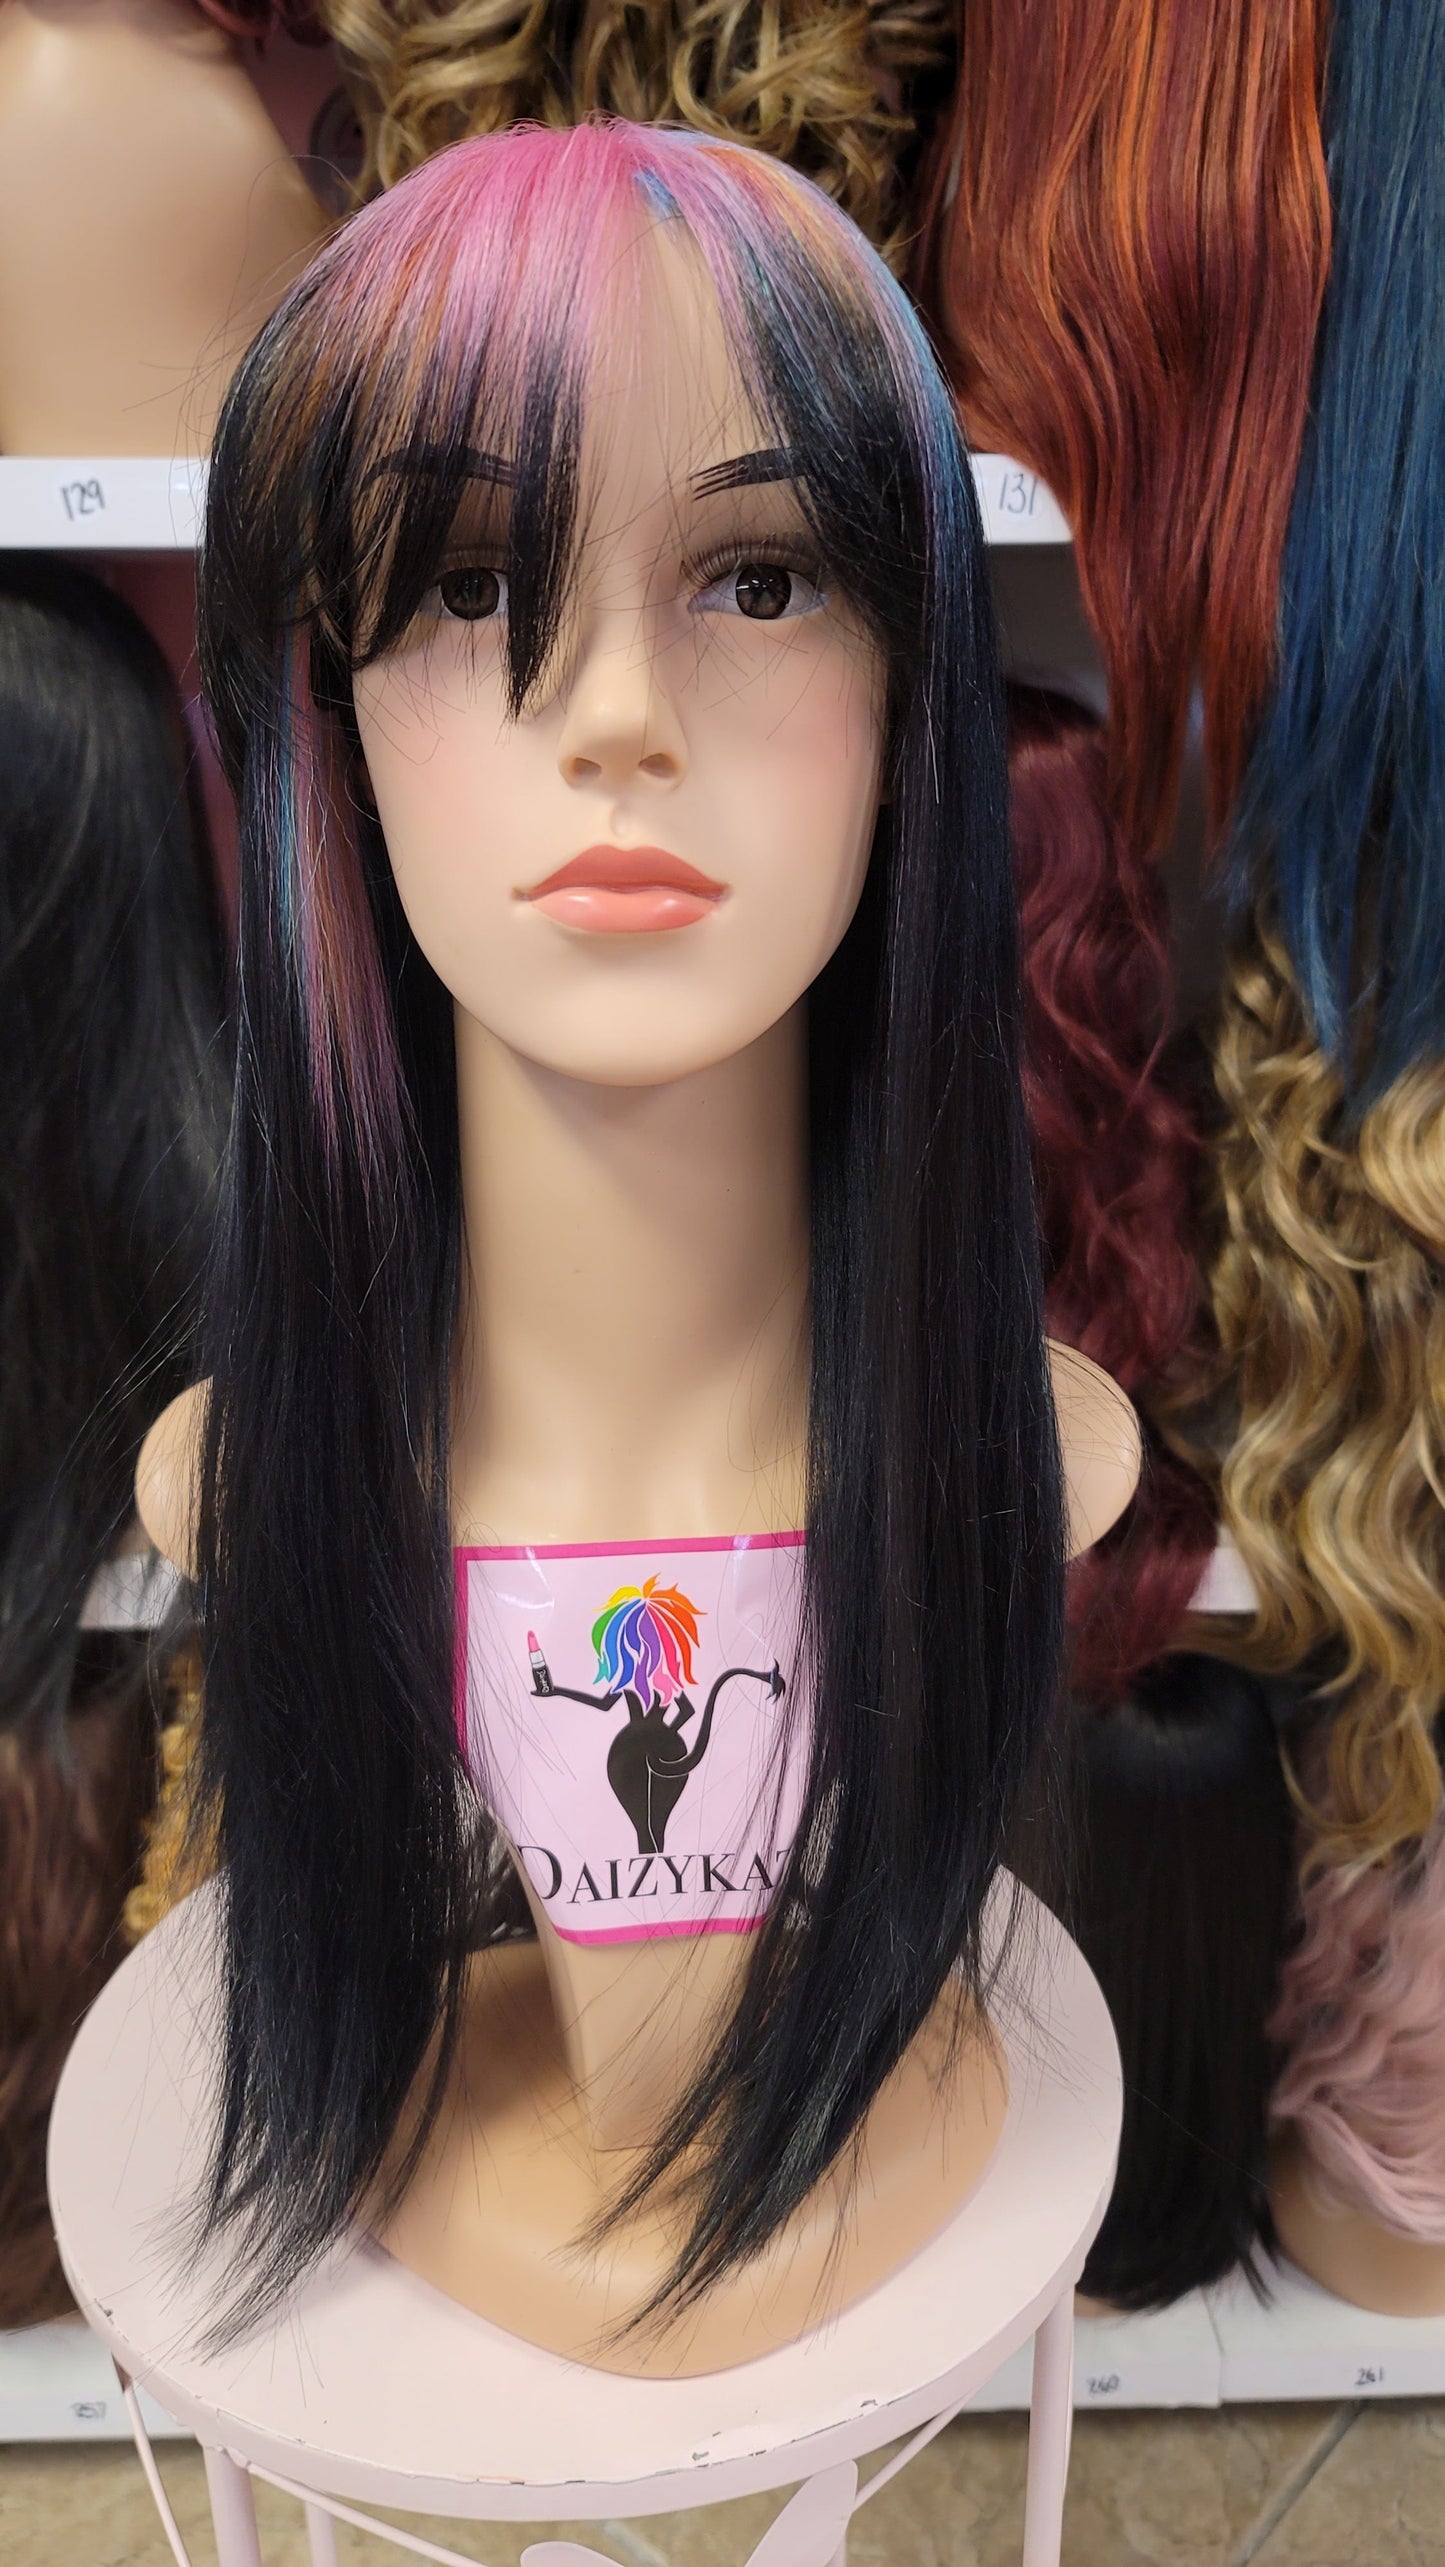 497 Rue - Classy Bangs Wig - RAINBOW/1B - DaizyKat Cosmetics 497 Rue - Classy Bangs Wig - RAINBOW/1B DaizyKat Cosmetics Wigs